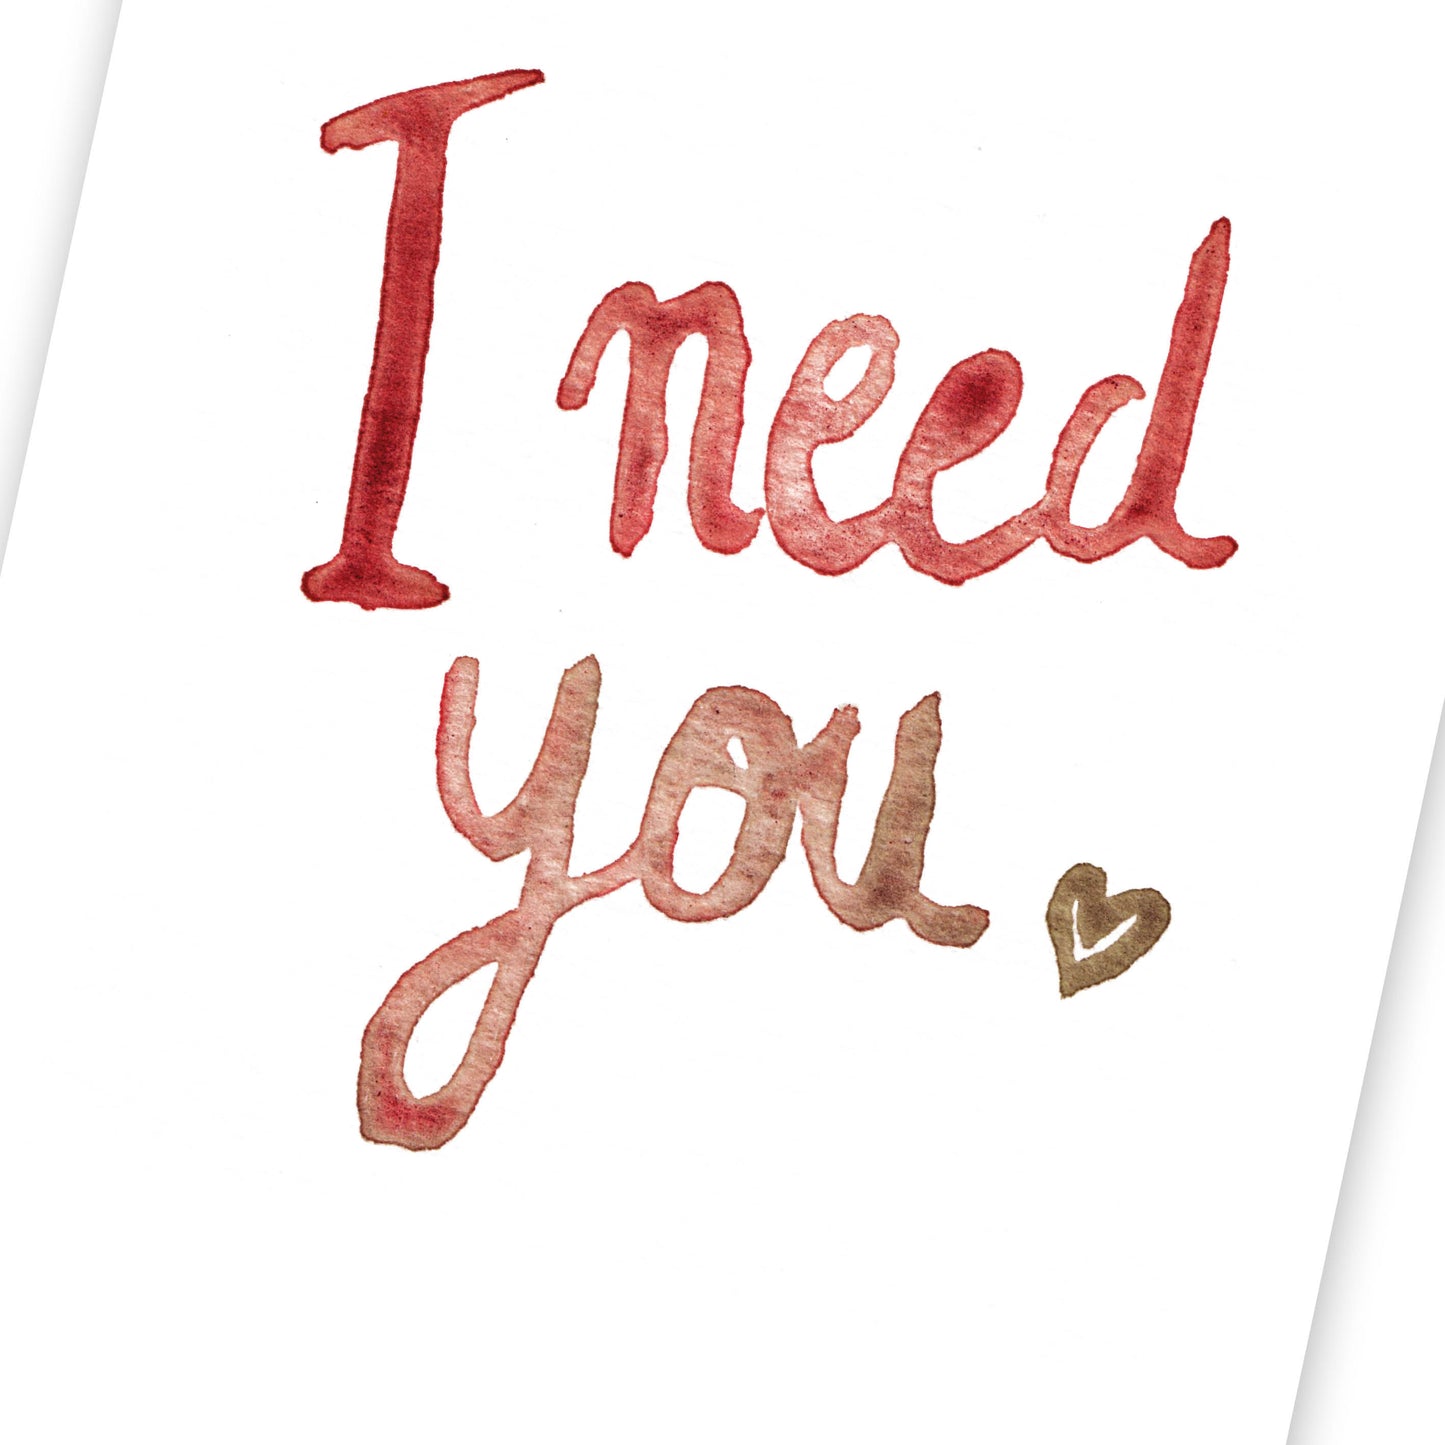 I need you (fin de série)